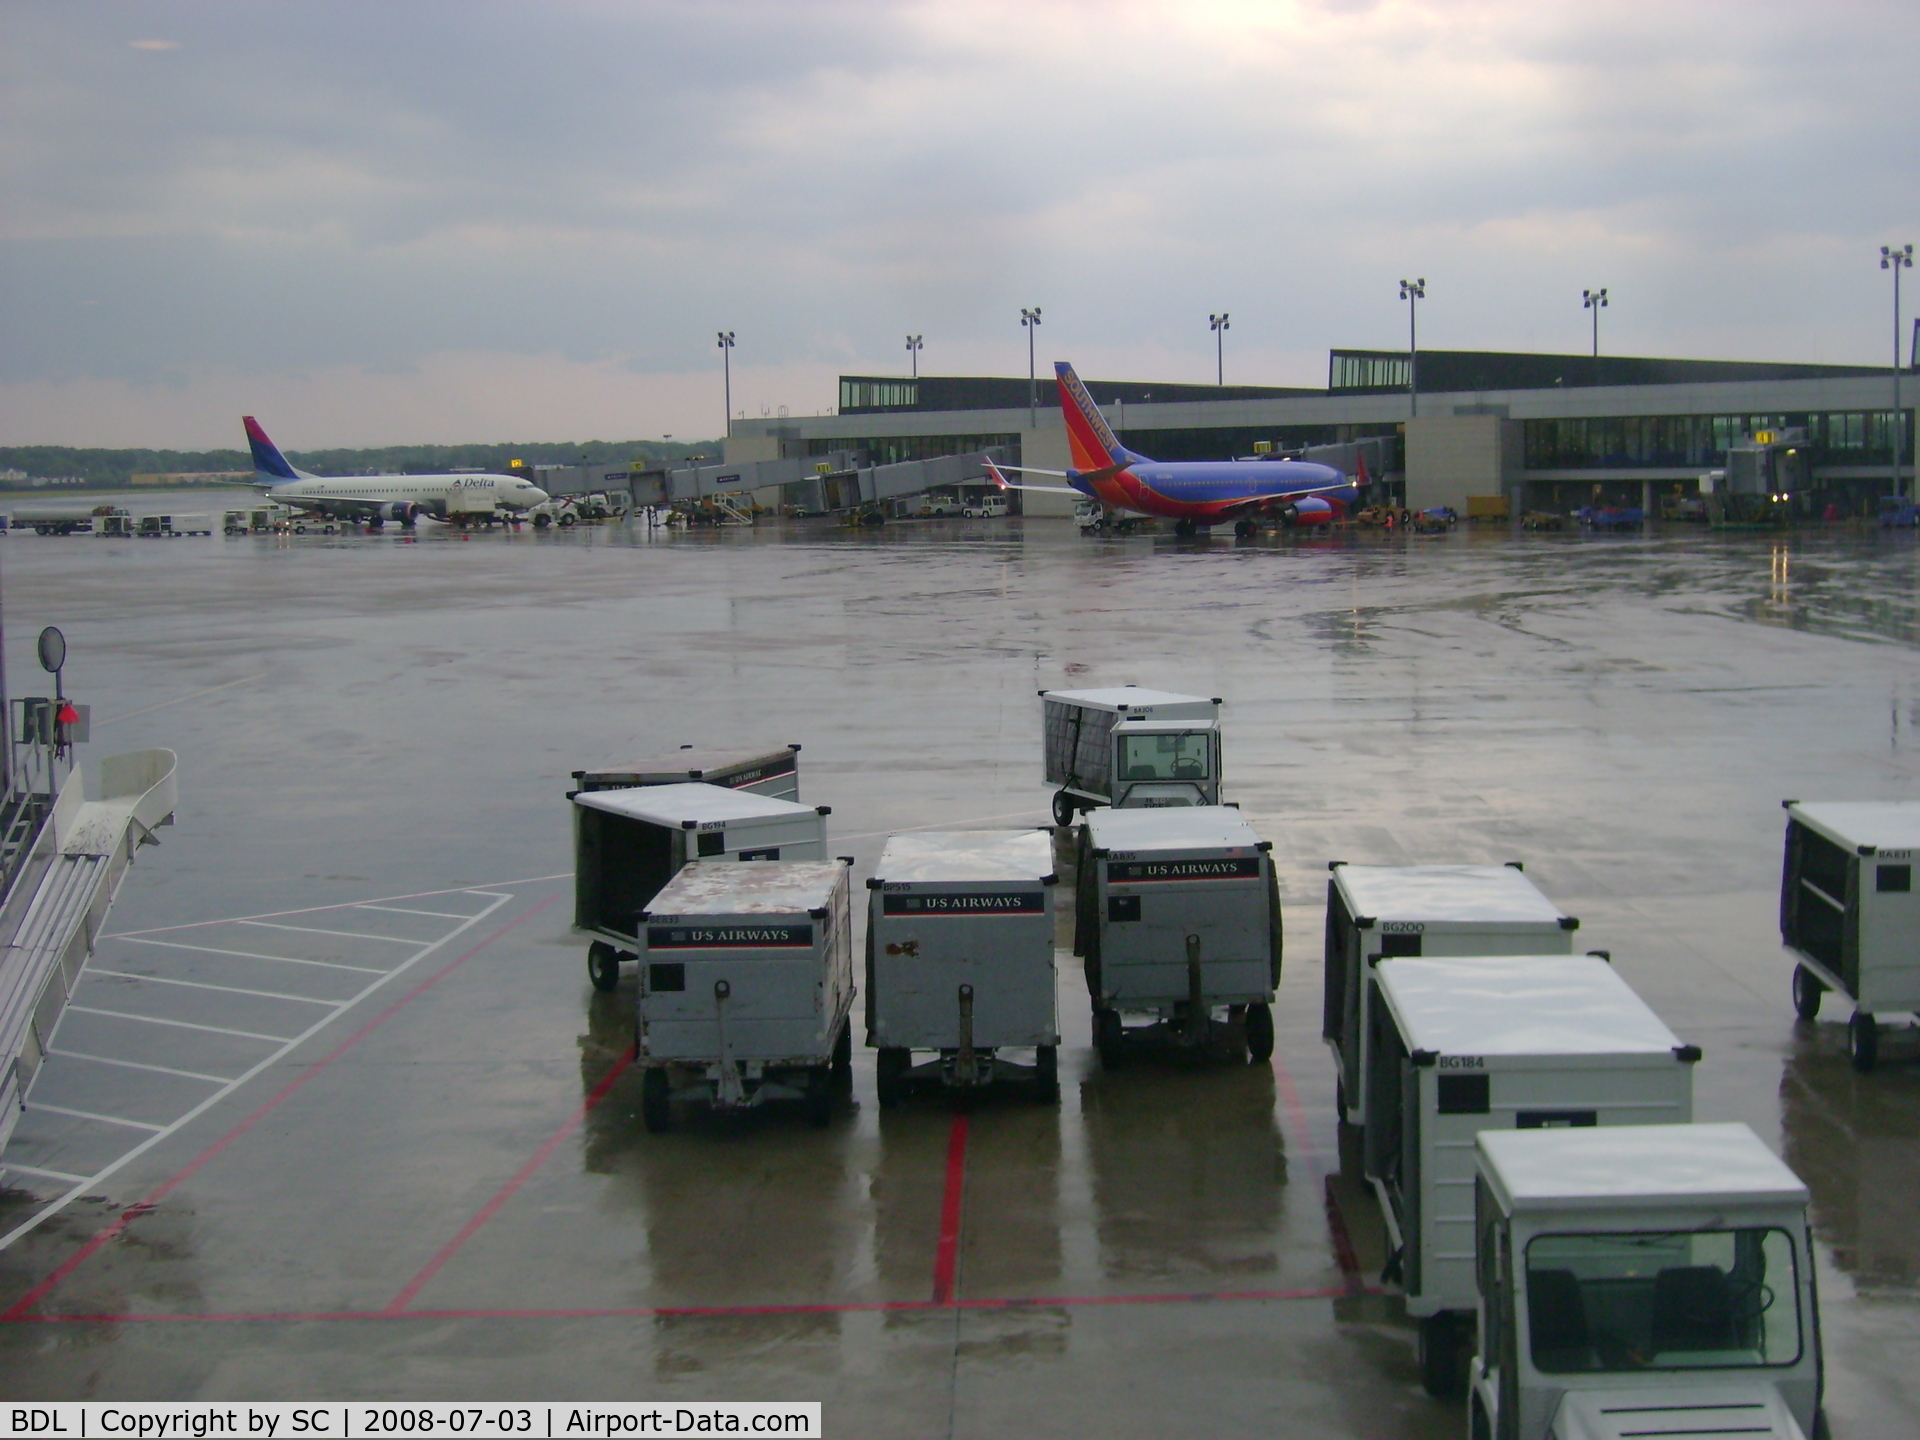 Bradley International Airport (BDL) - terminal A with Delta and Southwest flights scheduled to depar